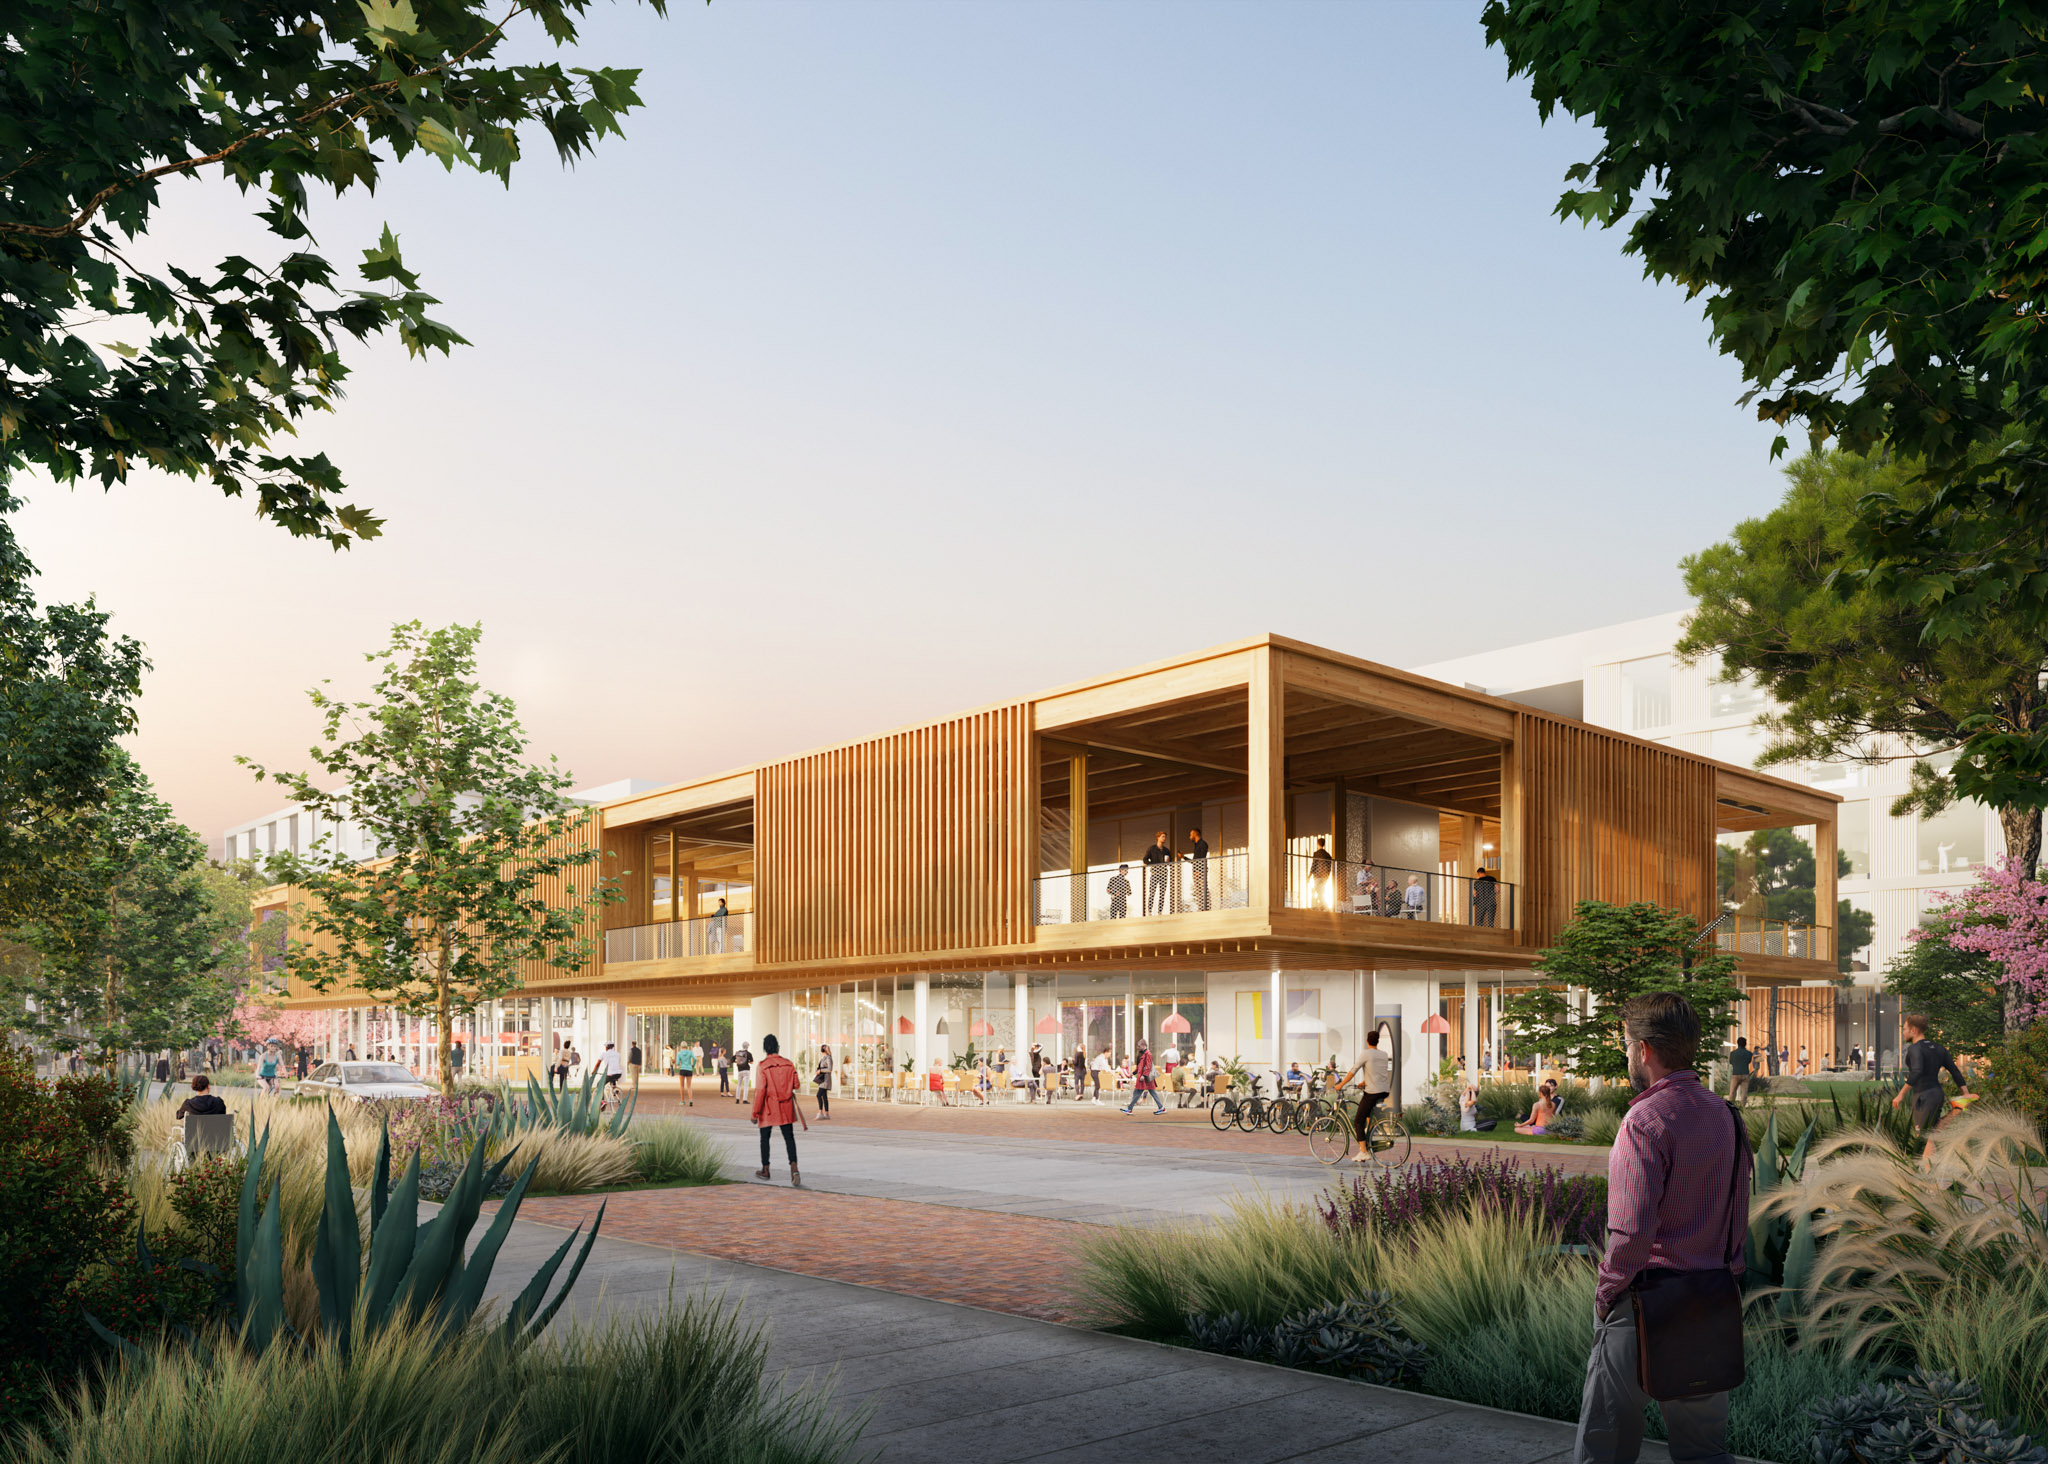 The Entrepreneurship Hub features mass timber construction.